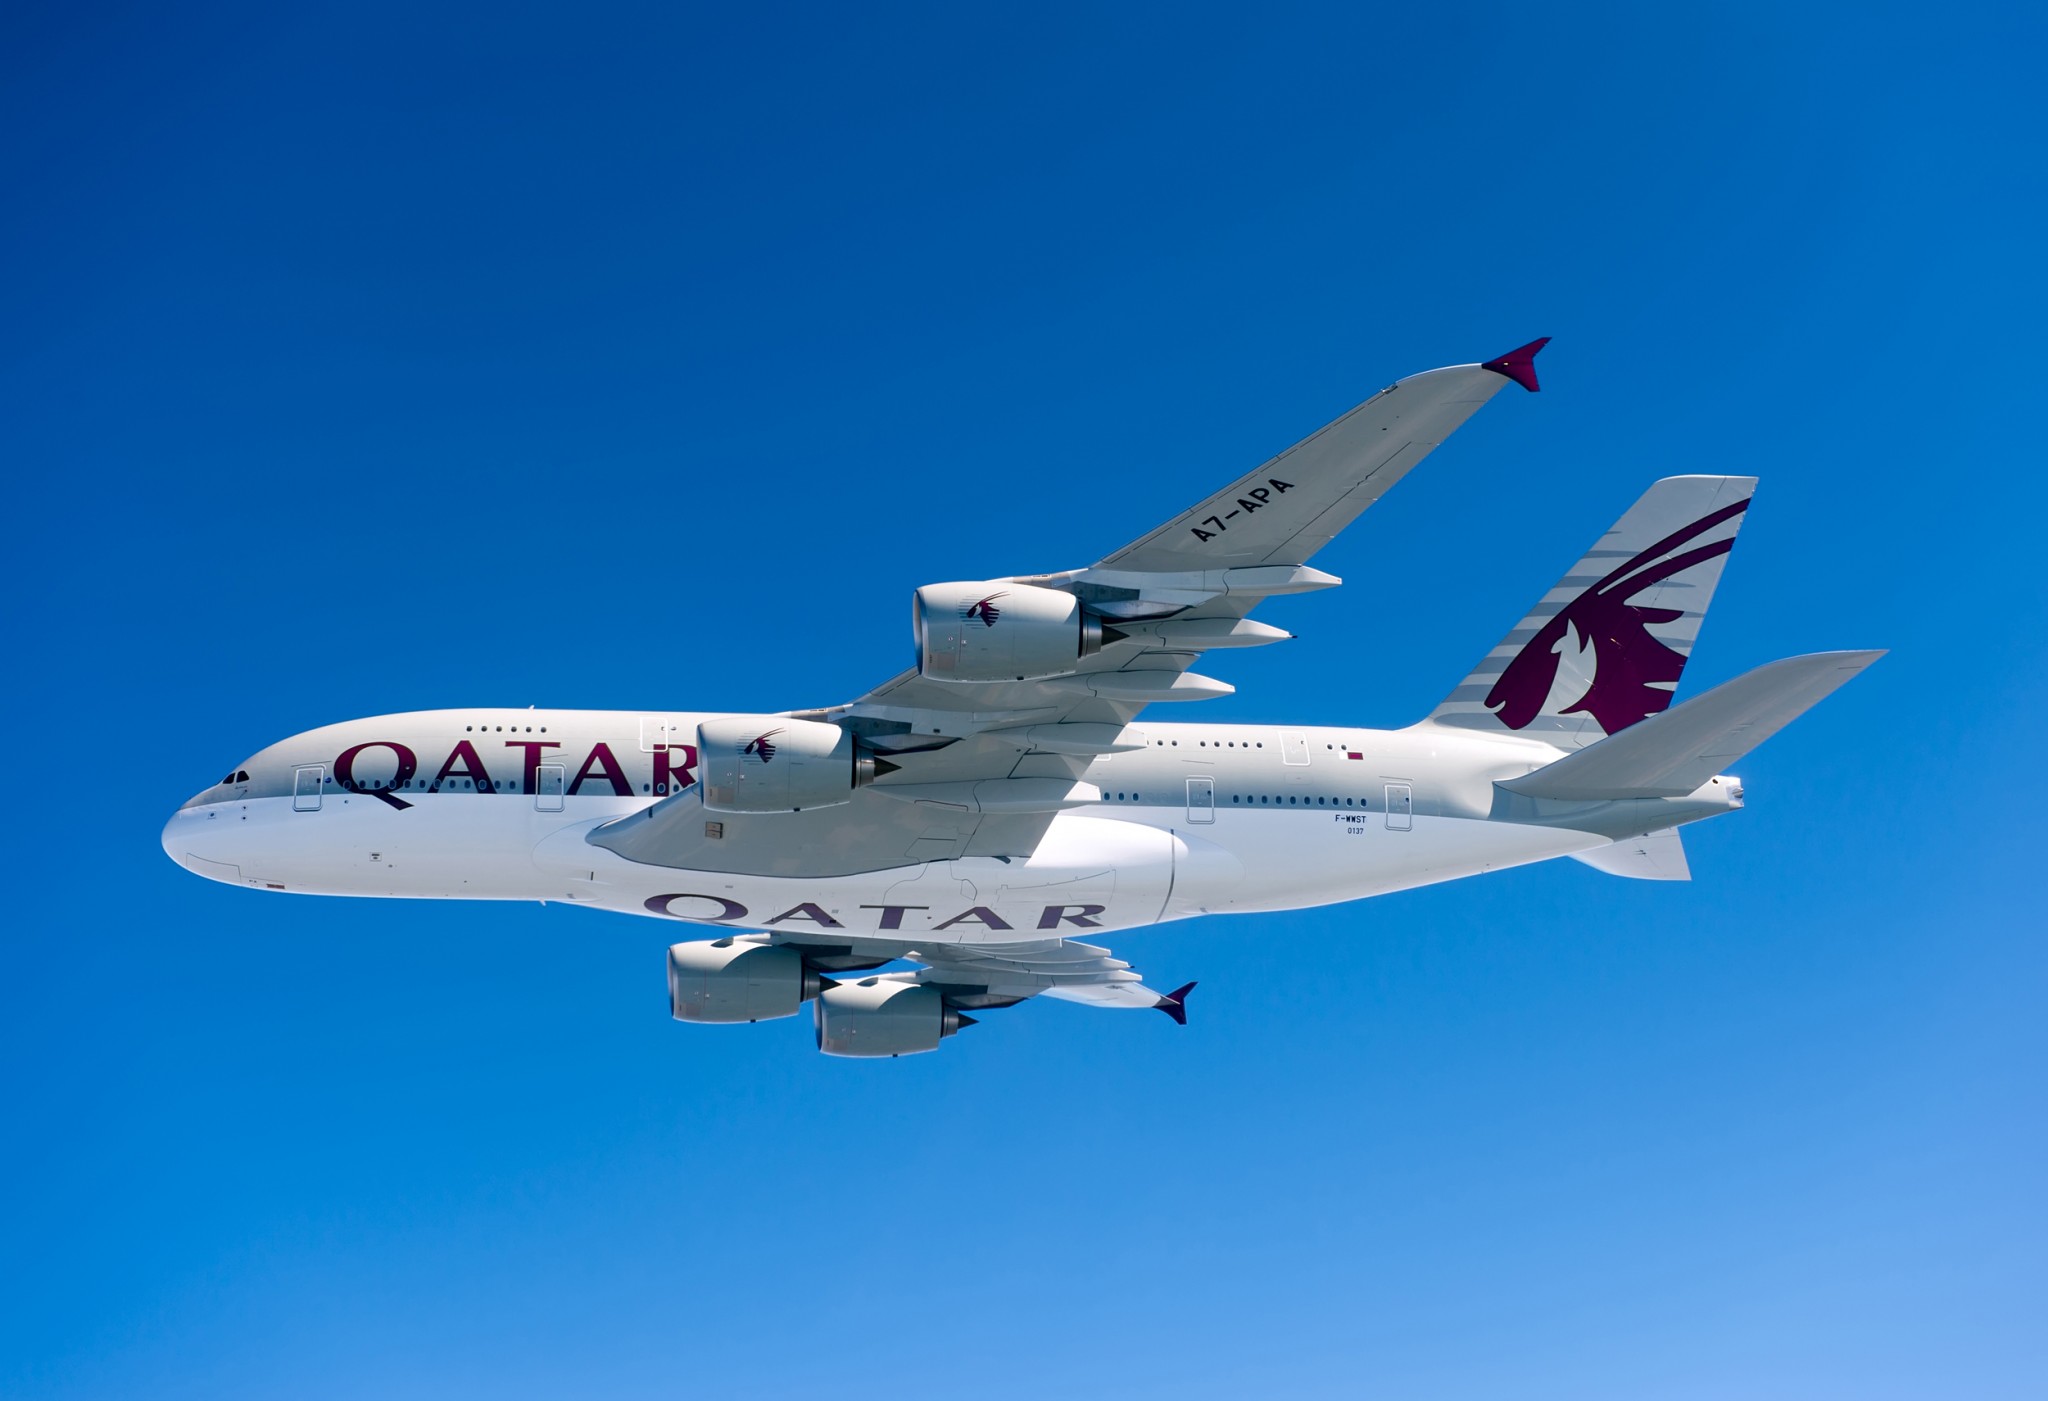 Qatar Airways starts flying a380 to Sydney due to increase in passenger demand